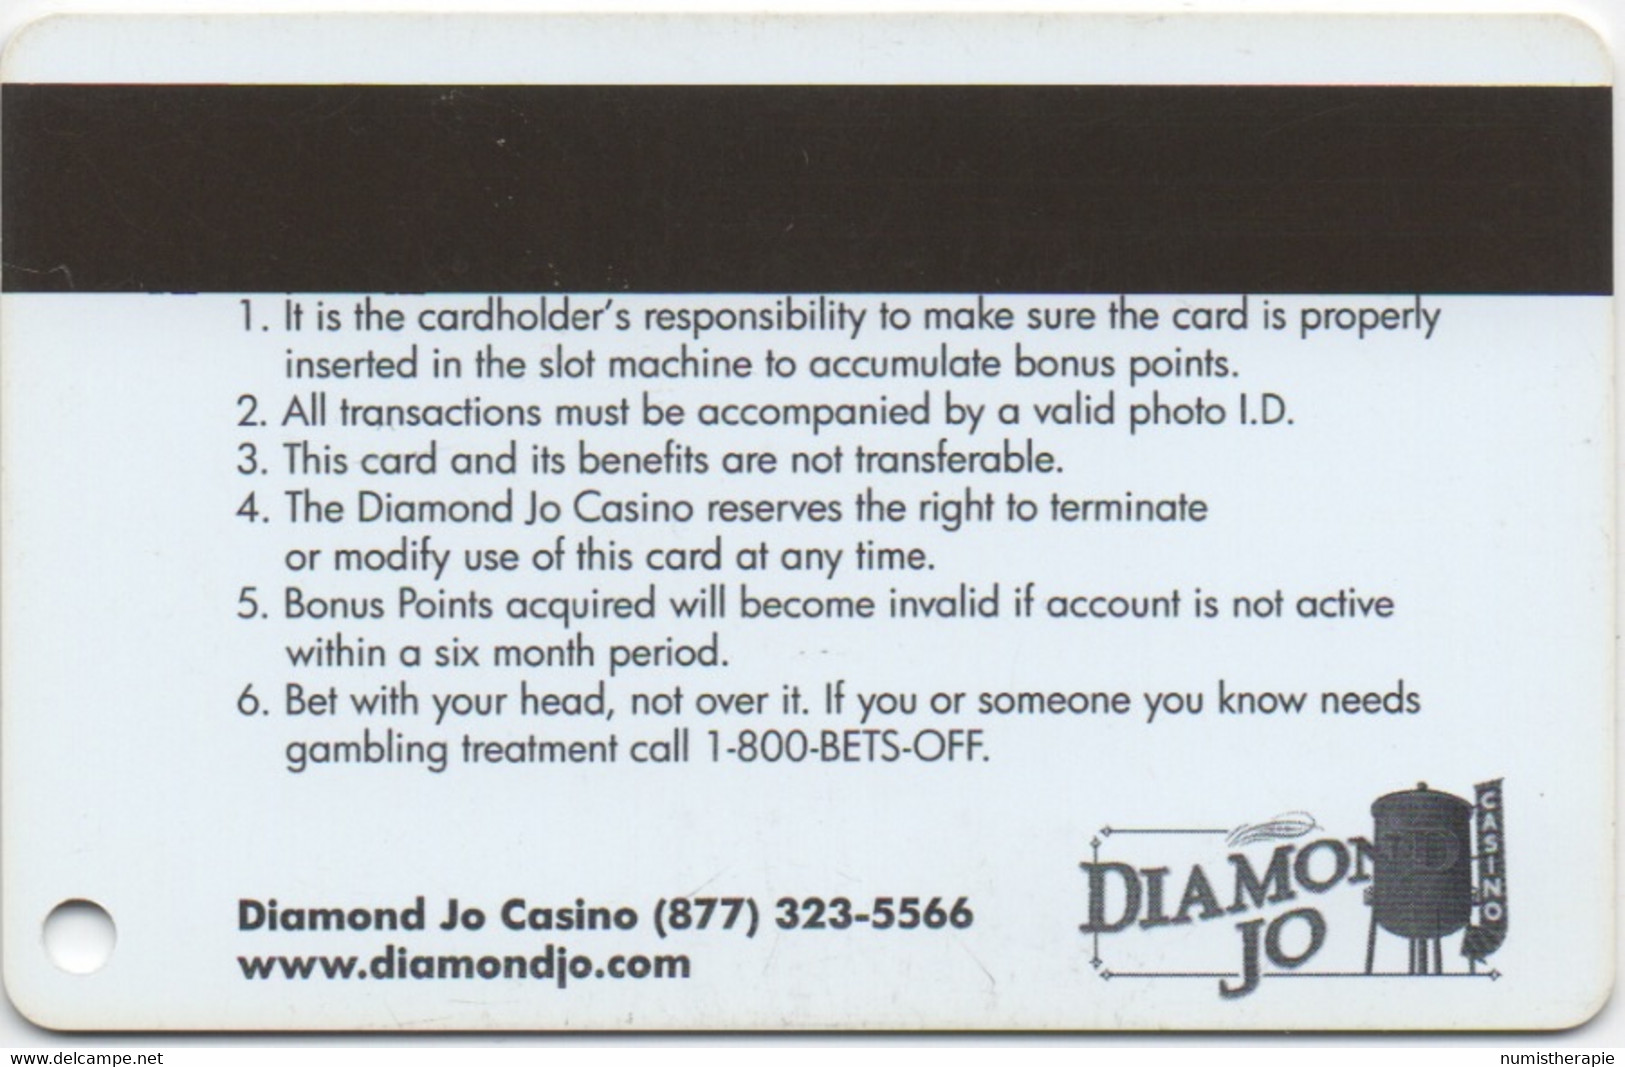 Diamond Jo Casino : Dubuque IA : Double Diamond Club - Casinokarten